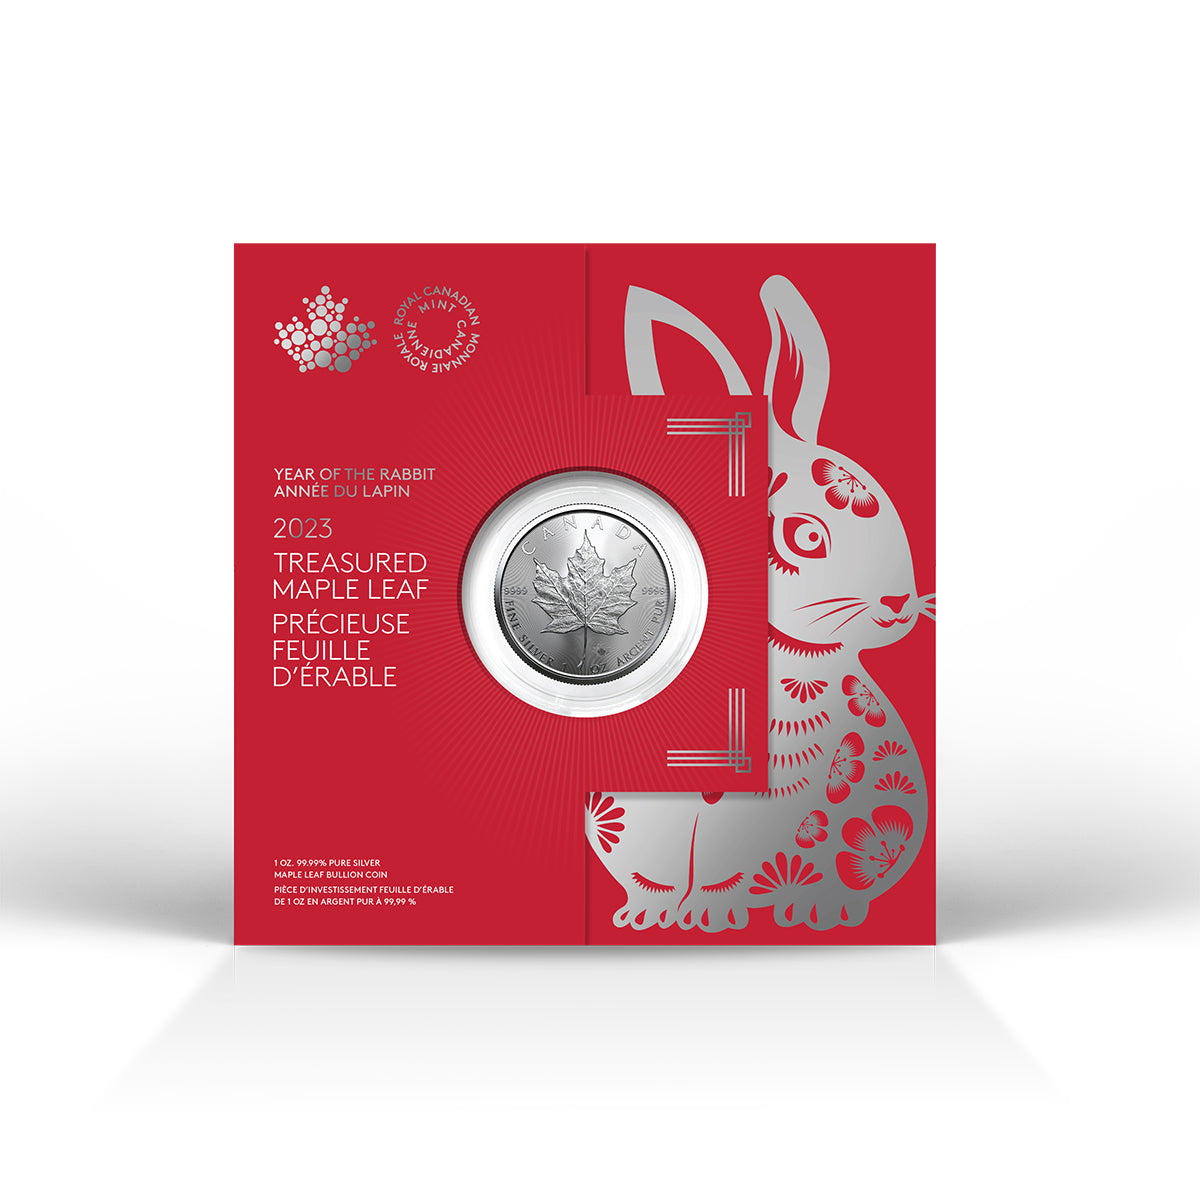 2023 $5 Treasured Silver Maple Leaf: Year of the Rabbit - Pure Silver Premium Bullion Coin